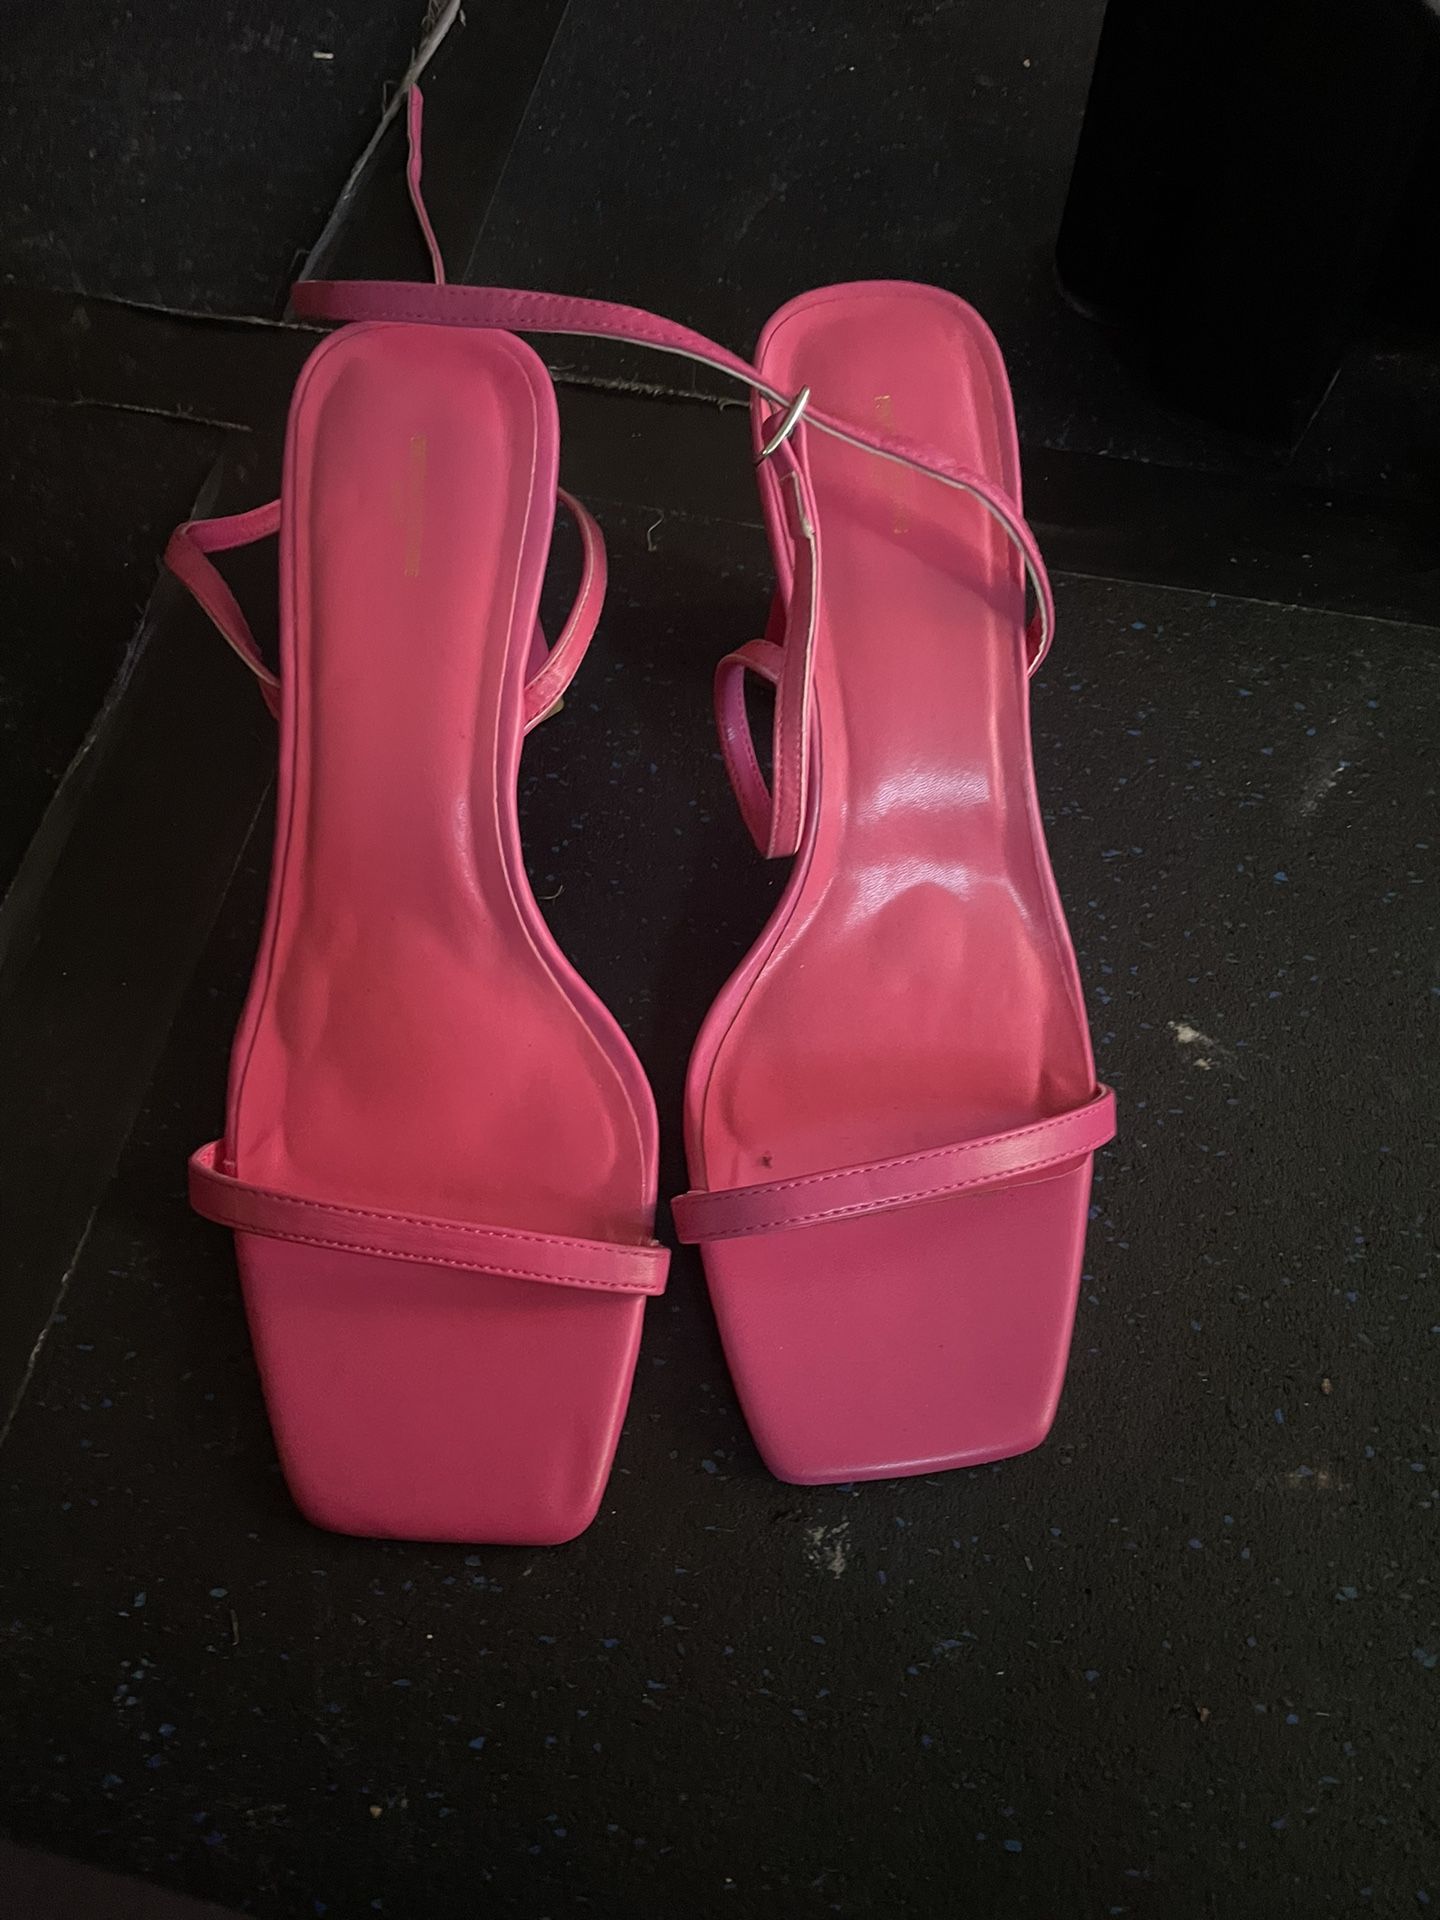 Pretty Little Things Pink Heels